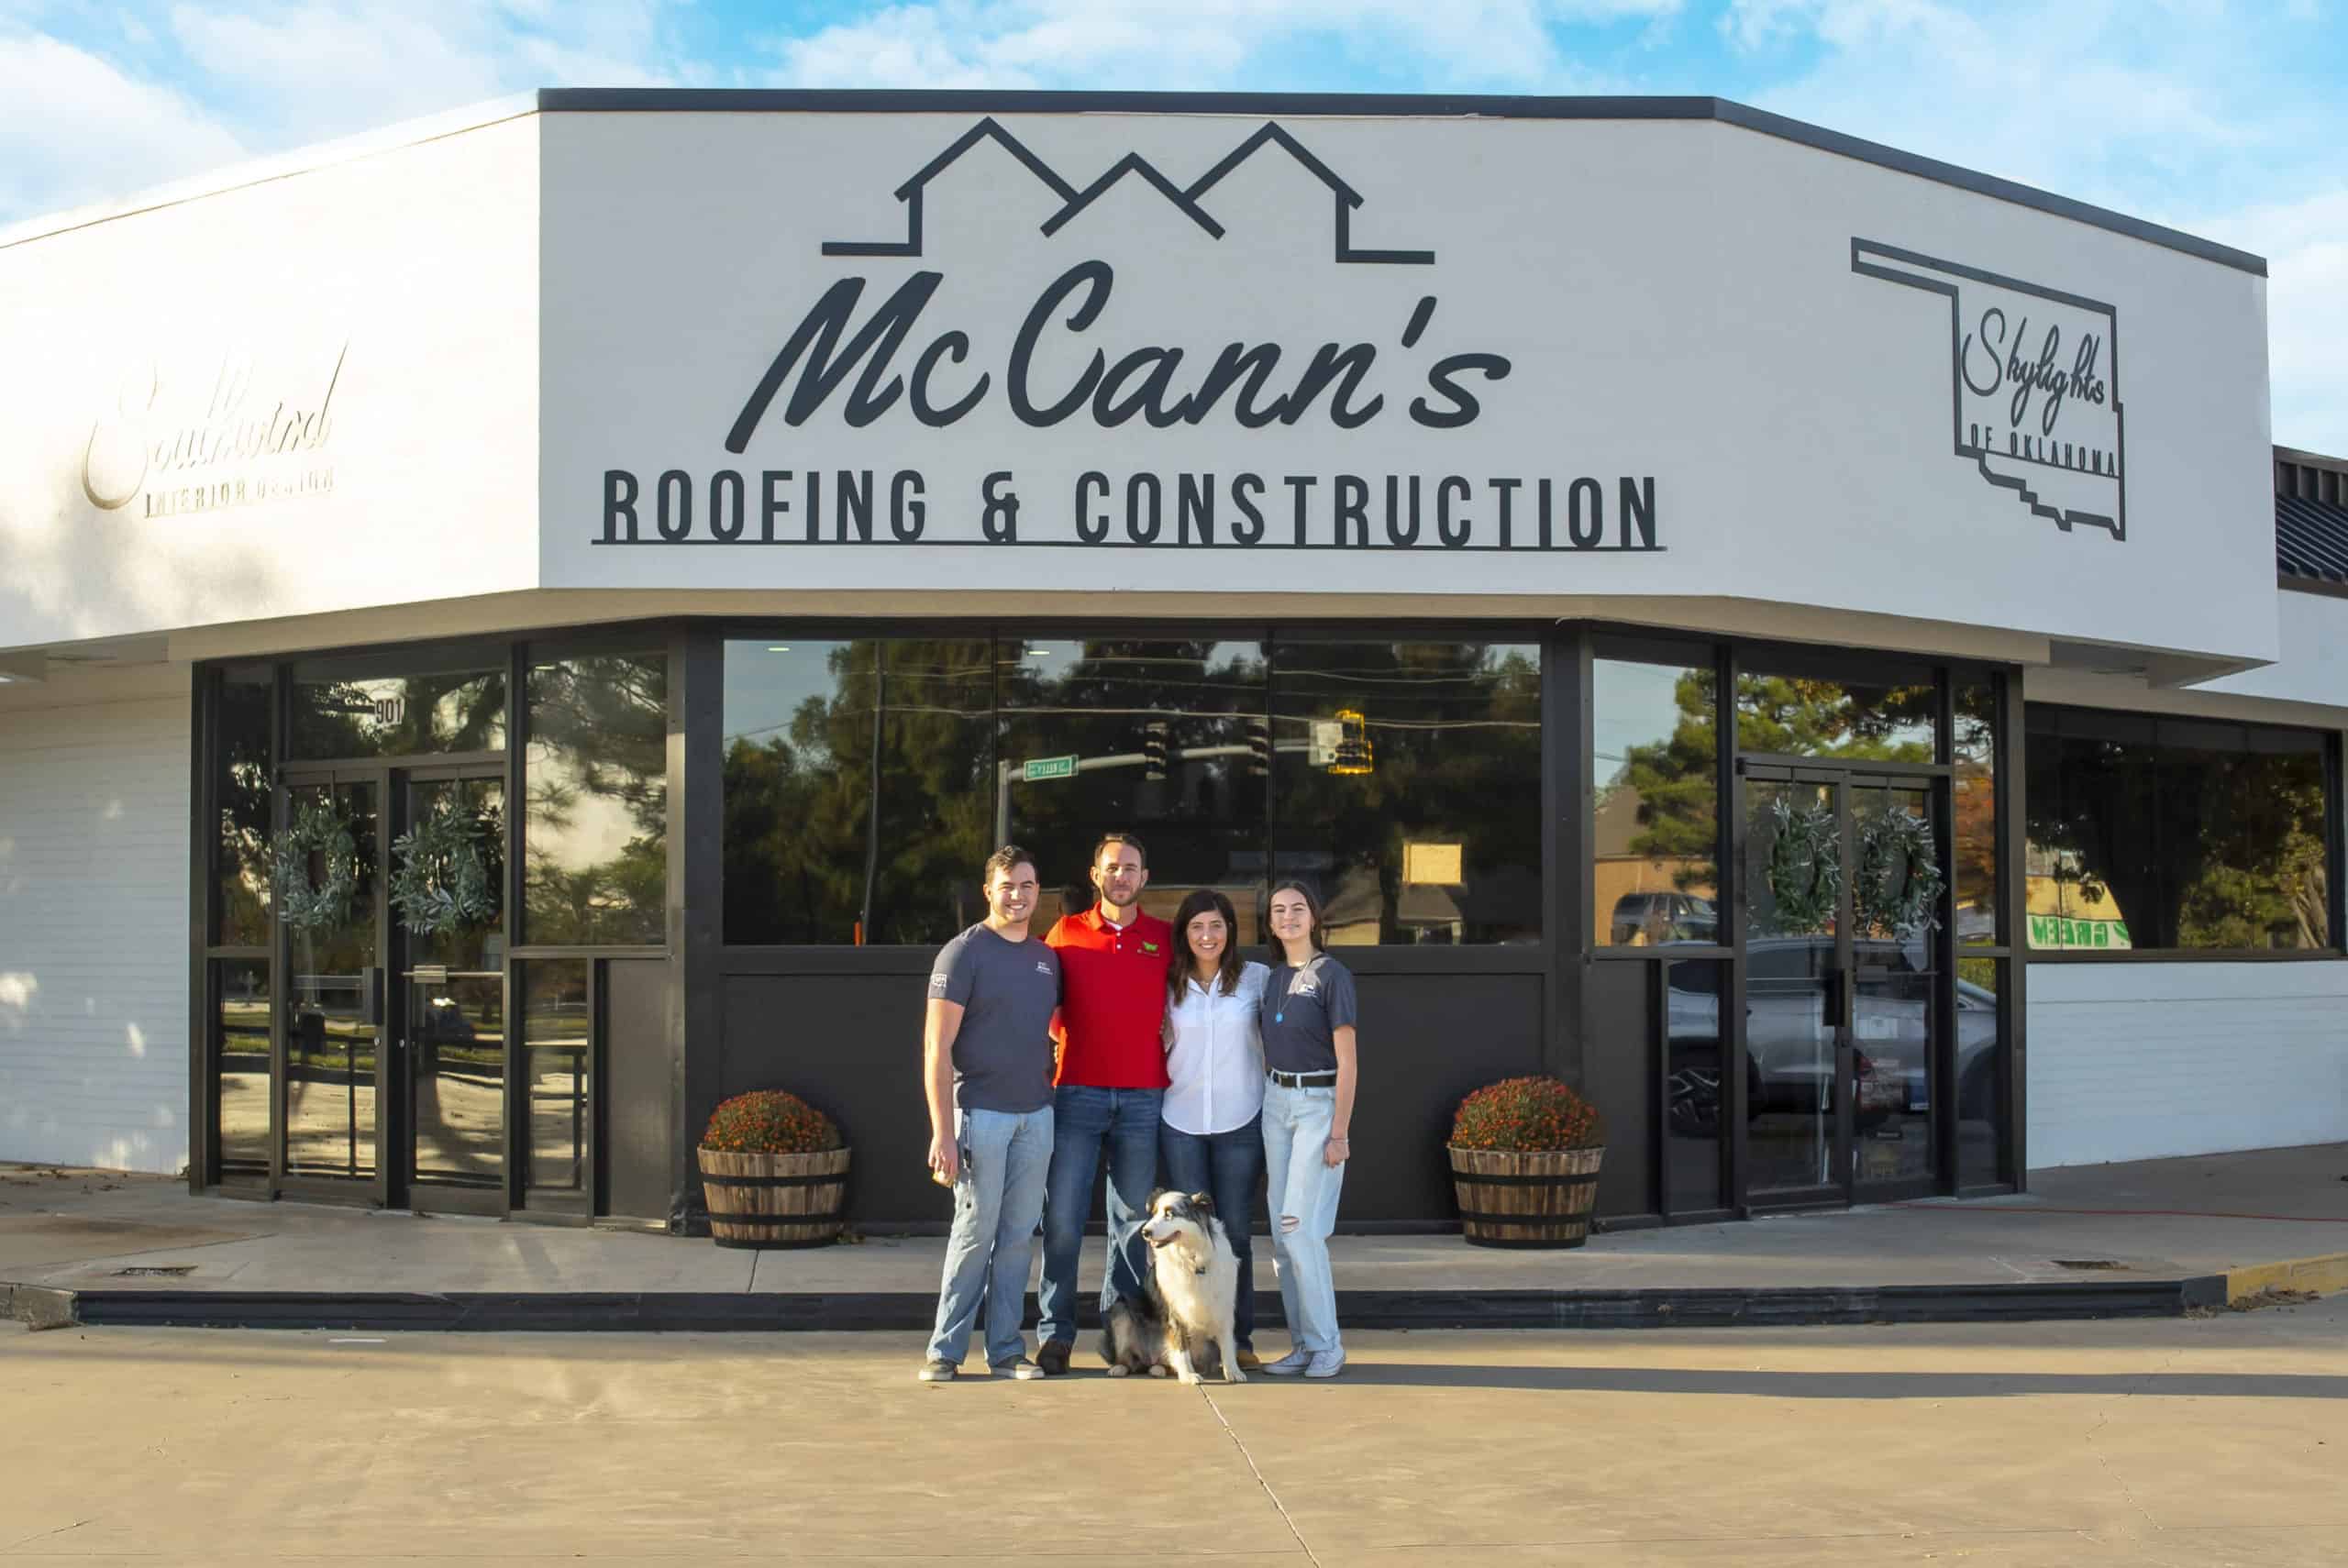 Commercial Roofing Services in Texas, Colorado, Oklahoma